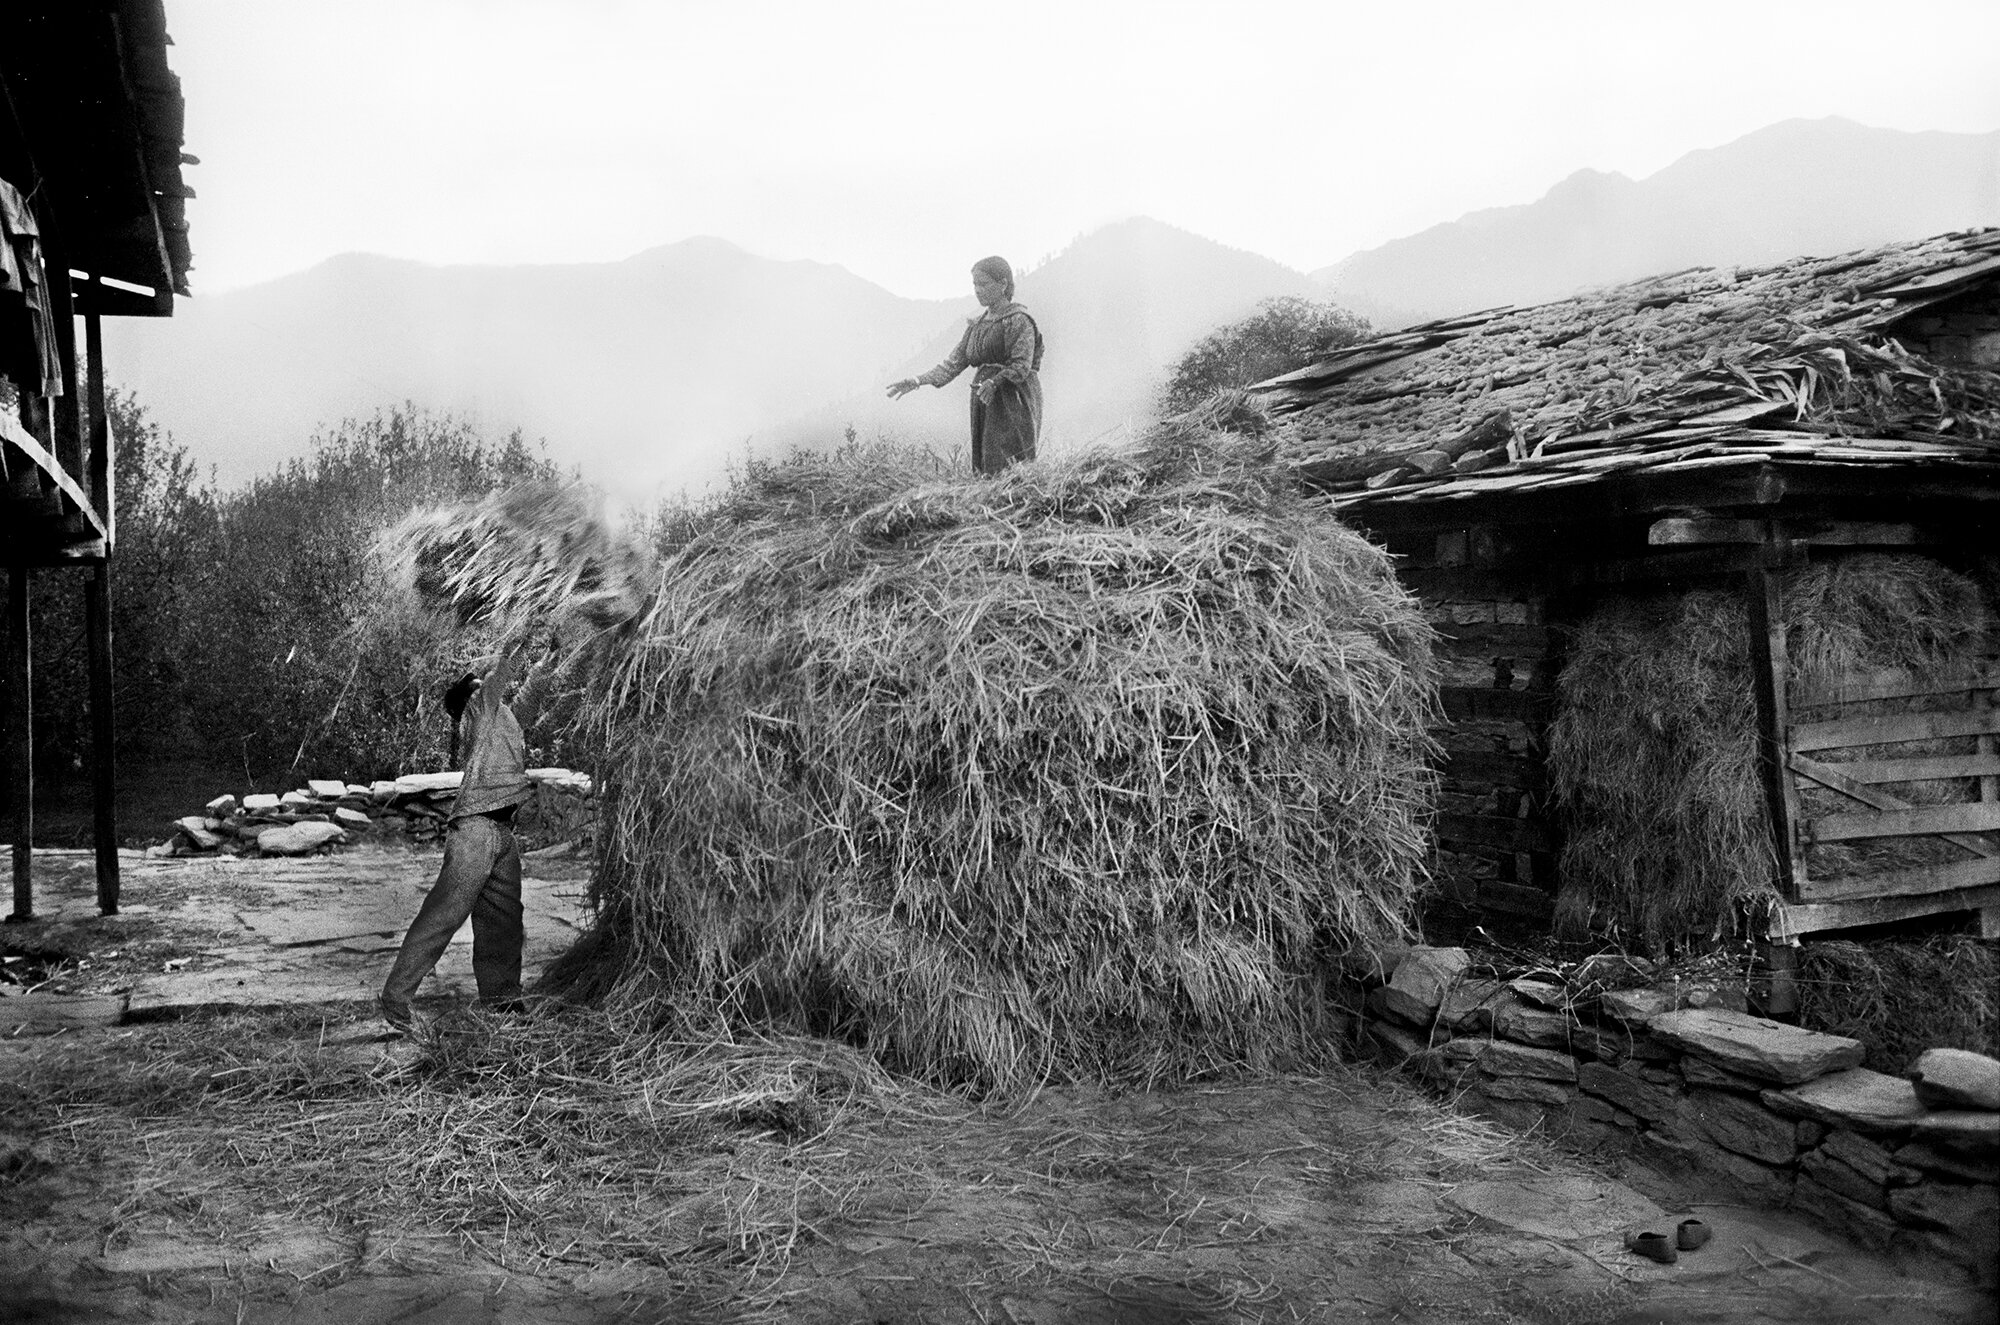   “Stacking Hay” somewhere in Kullu, Bihar, Himachal Pradesh, India. 1999 